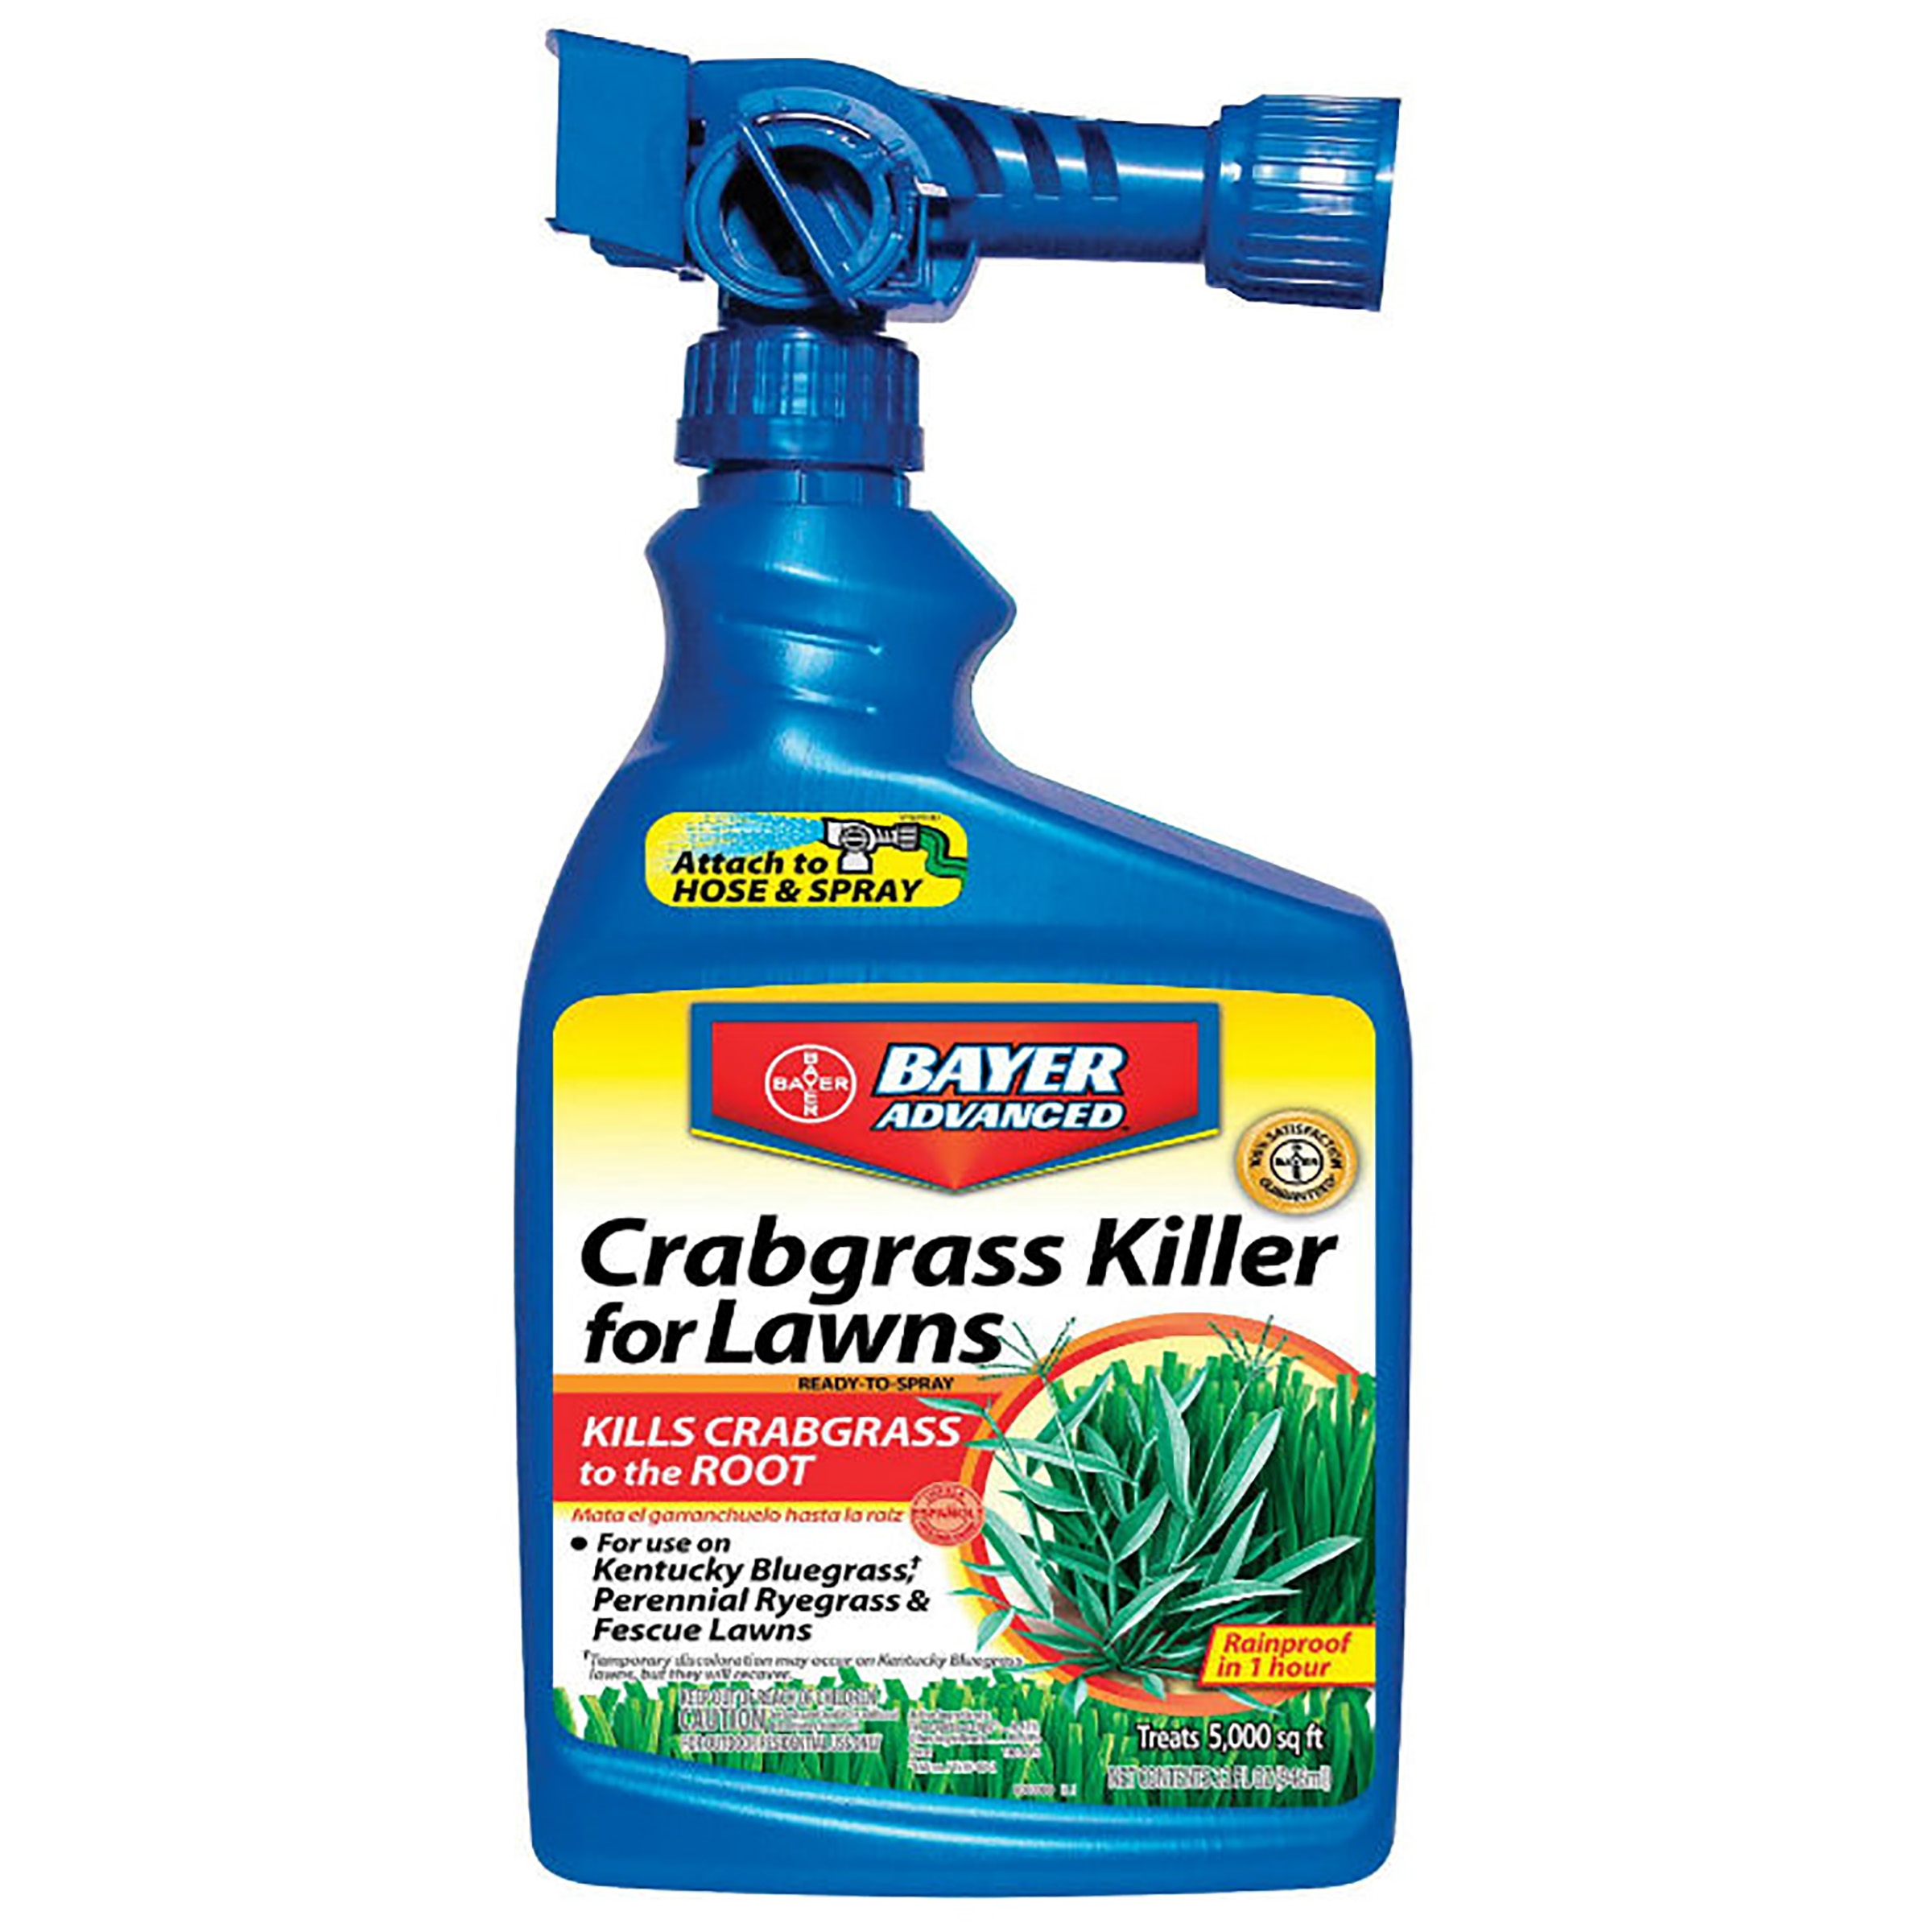 704119A Extreme Crabgrass Killer, Liquid, Beige/White, 32 oz Package